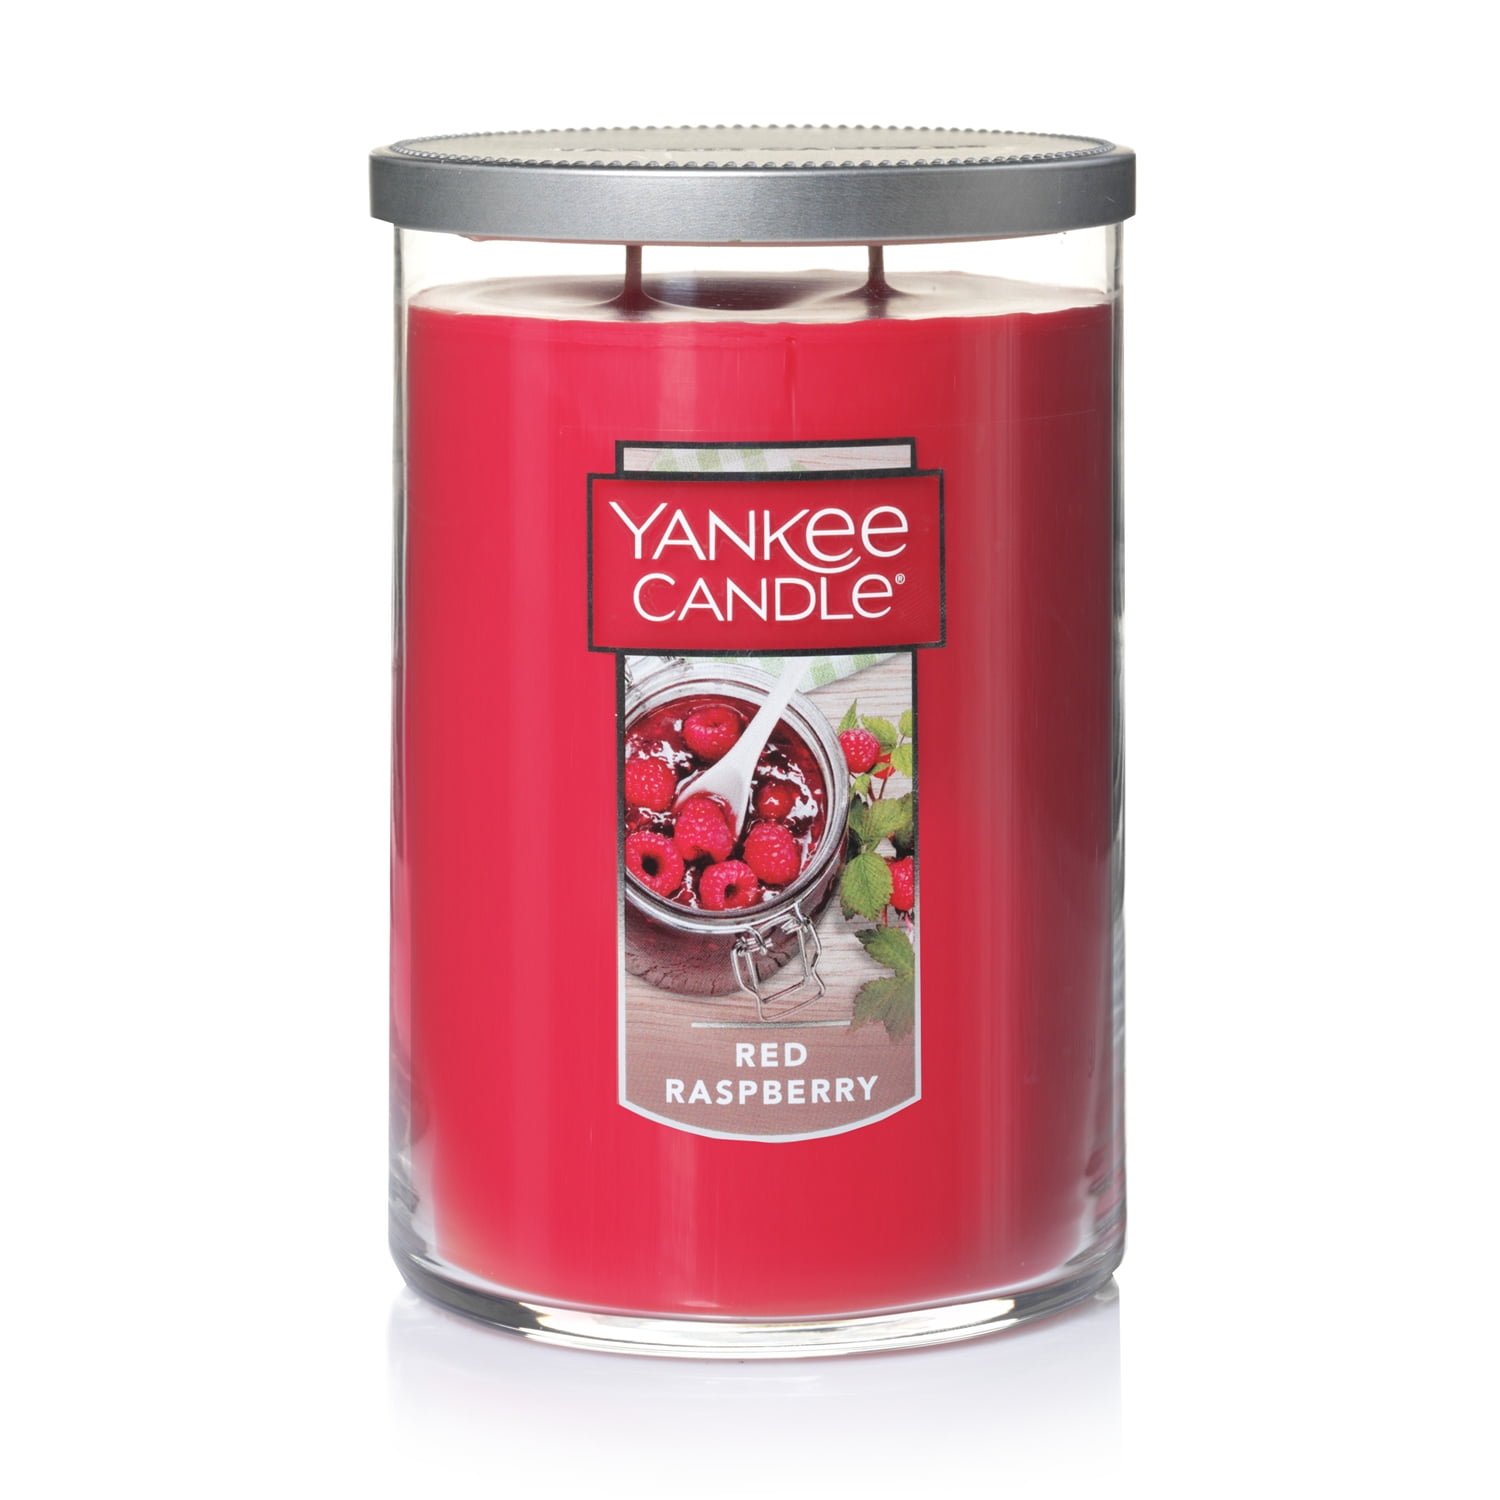 Yankee Candle Fresh Fruit Scents - Walmart.com